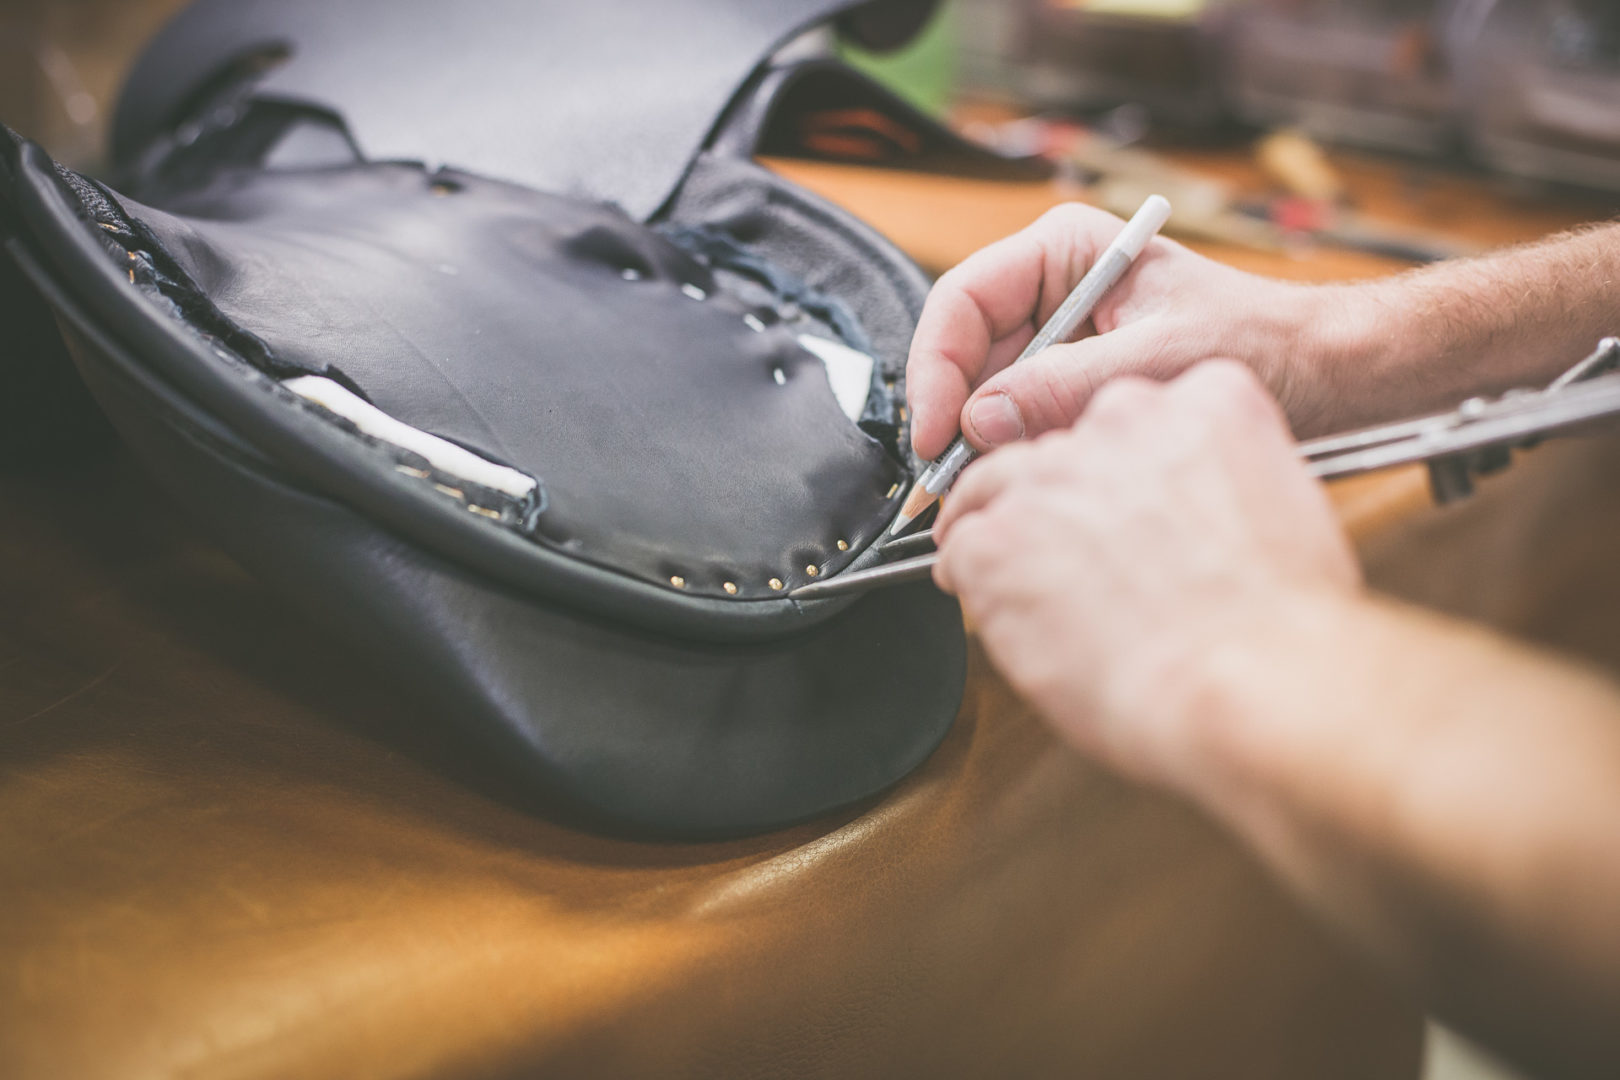 Sellier atelier workshop Childéric selle sur-mesure cuir leather saddle artisanat made in France fait en France